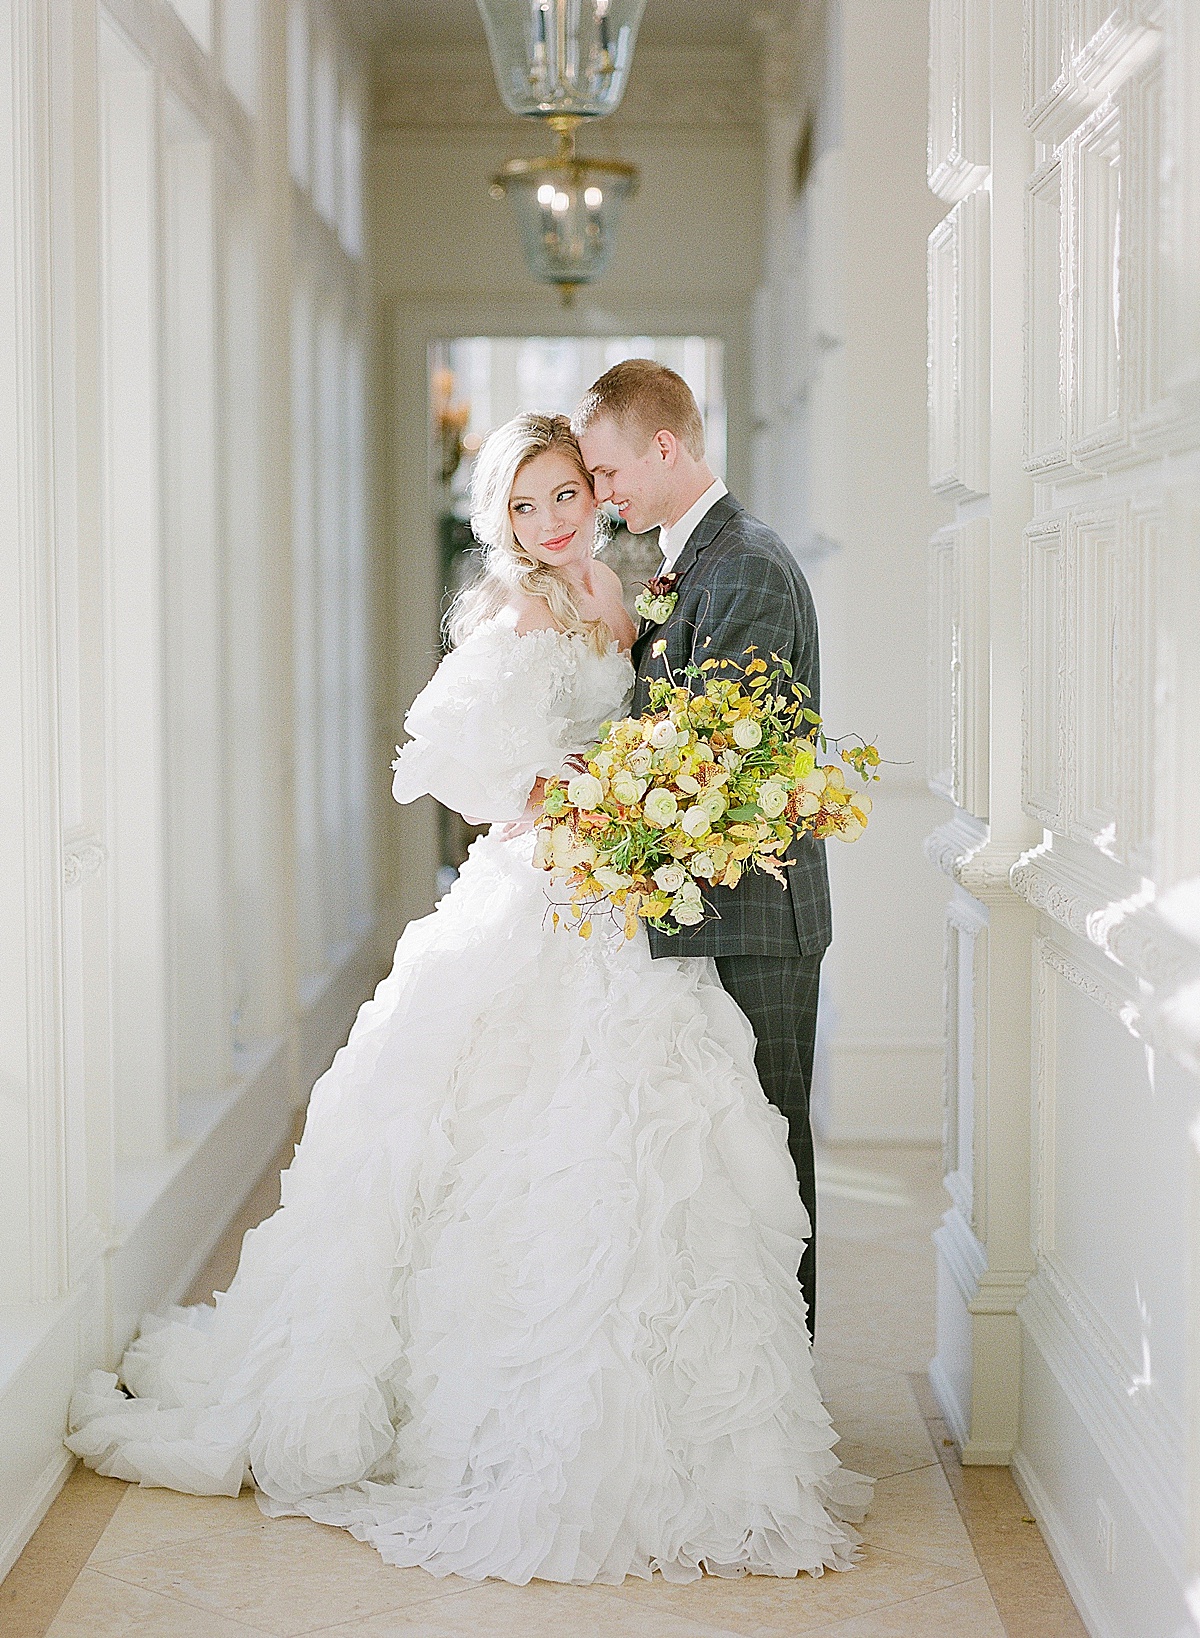 7 Reasons Why We Still Shoot Film Bride and Groom Hugging in Hallway Photo